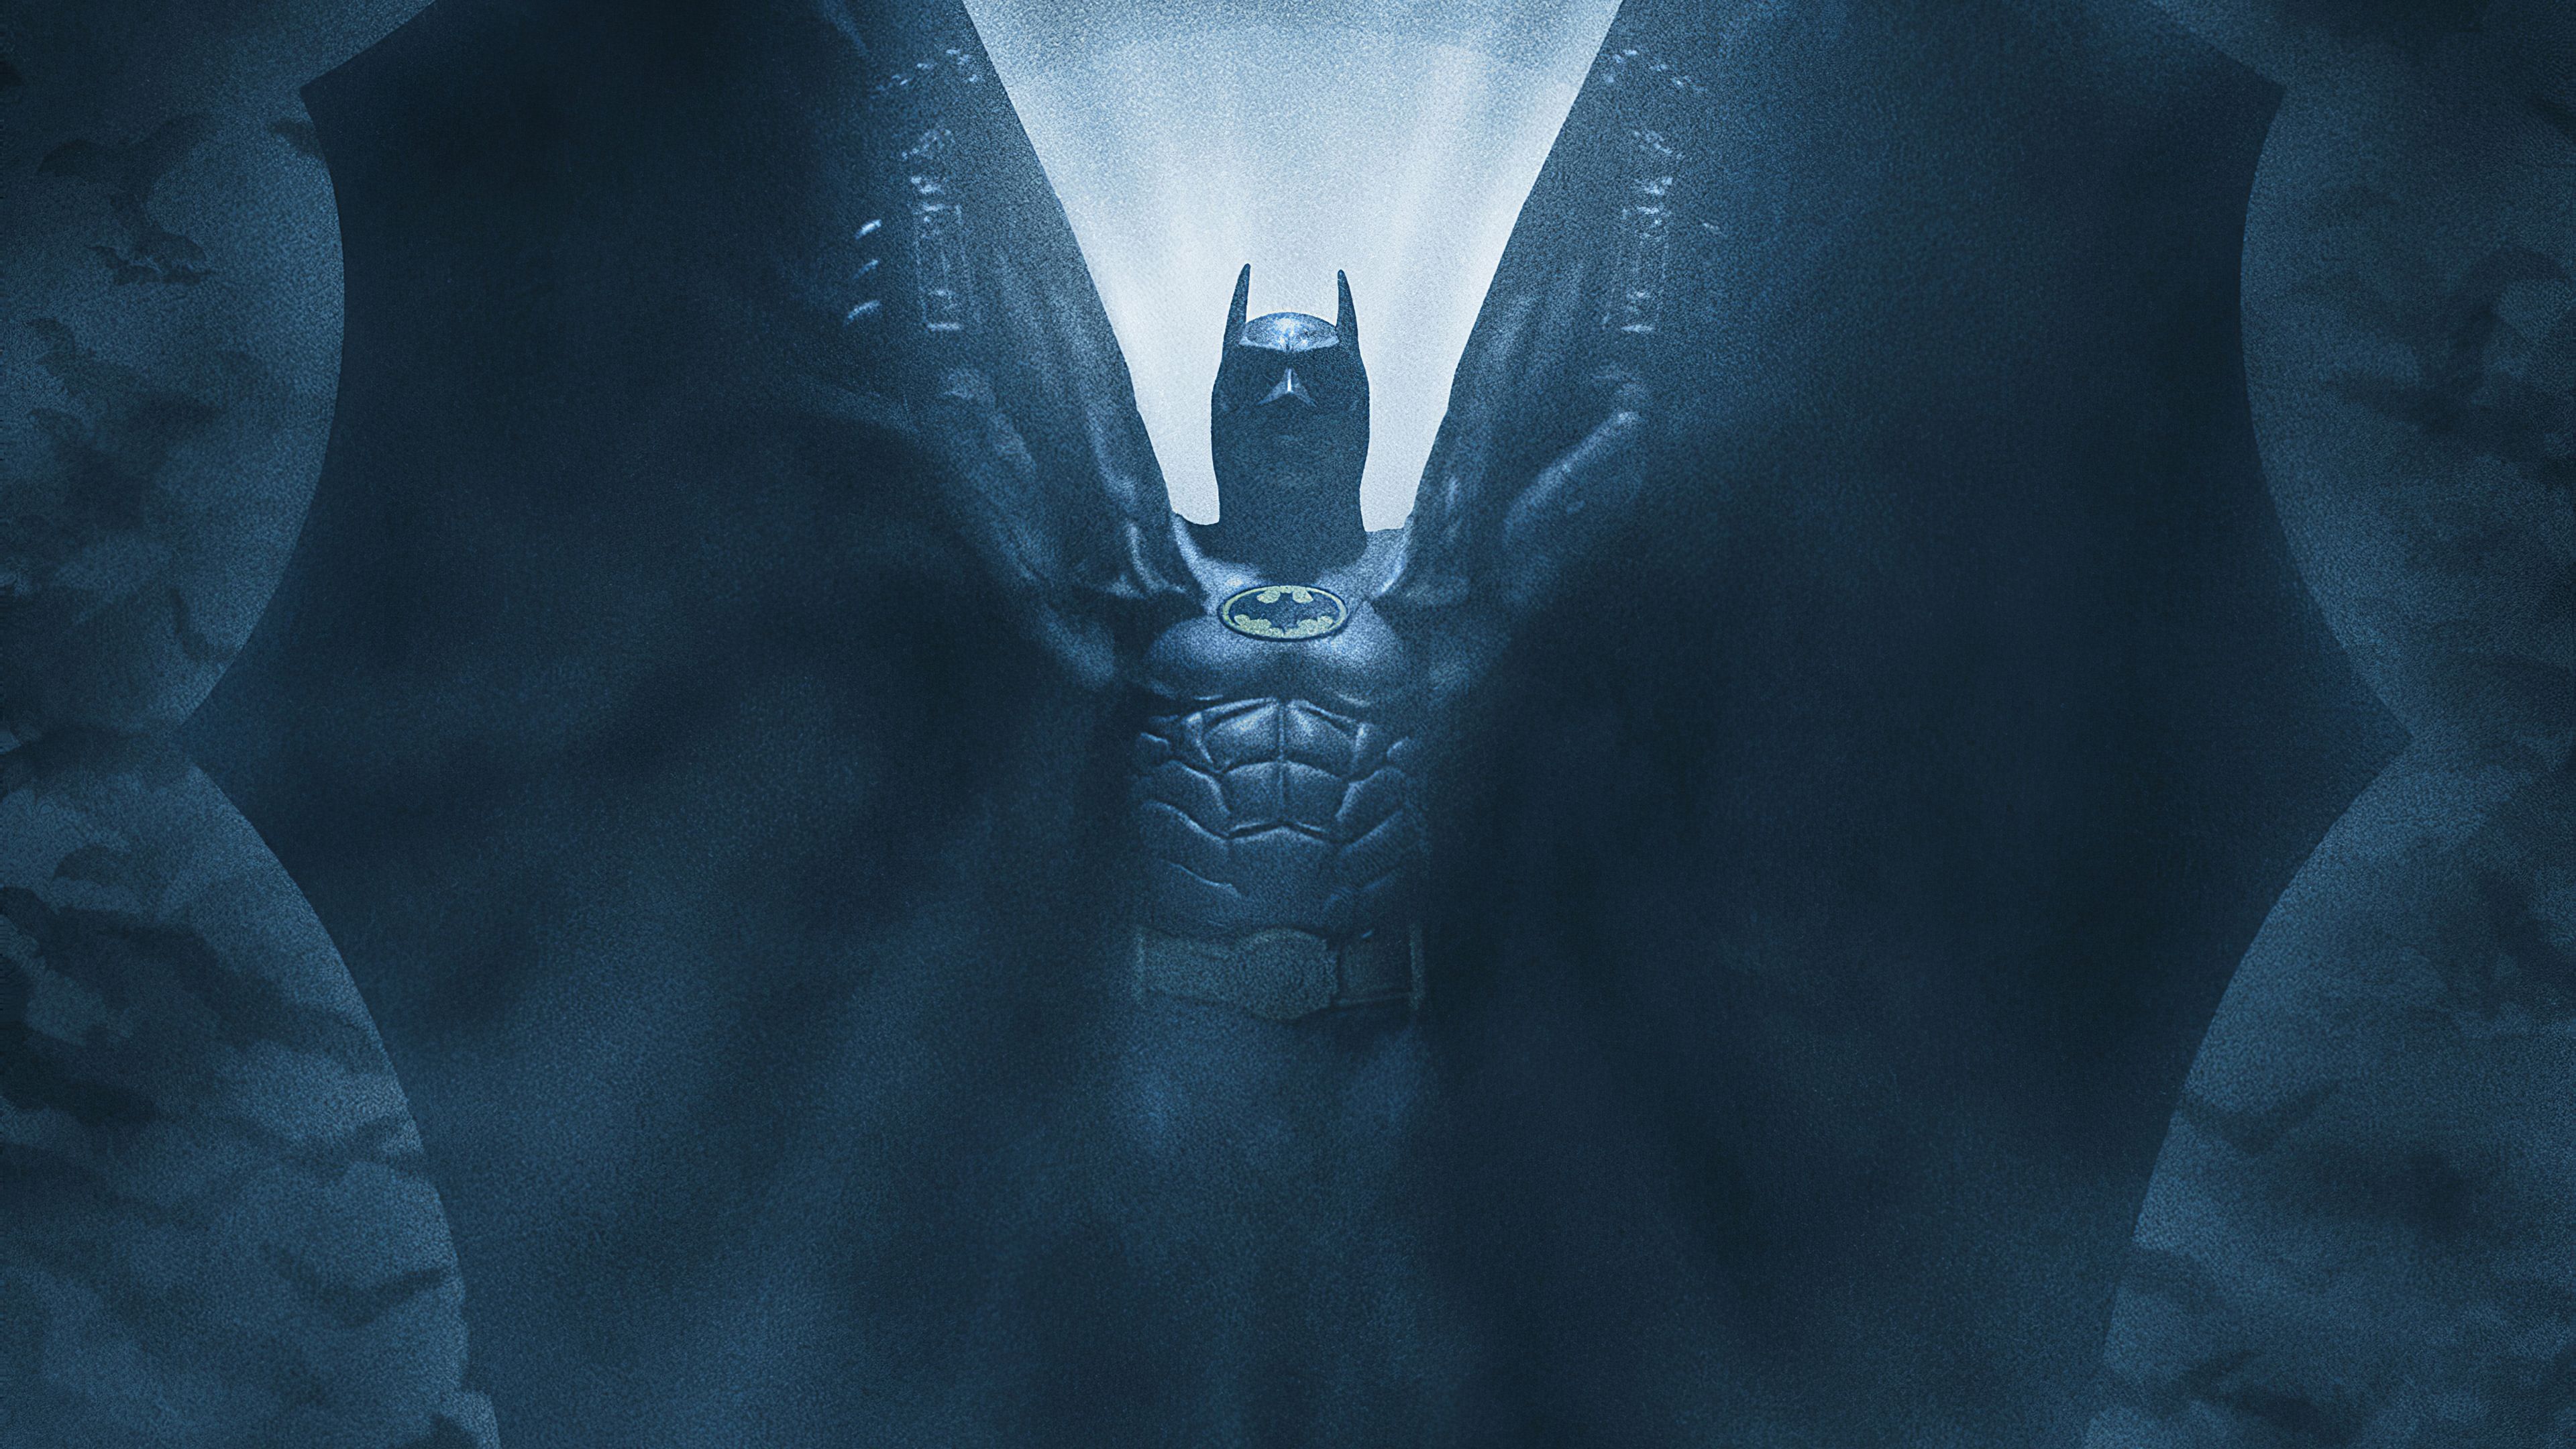 Batman Michael Keaton 4k, HD Superheroes, 4k Wallpaper, Image, Background, Photo and Picture